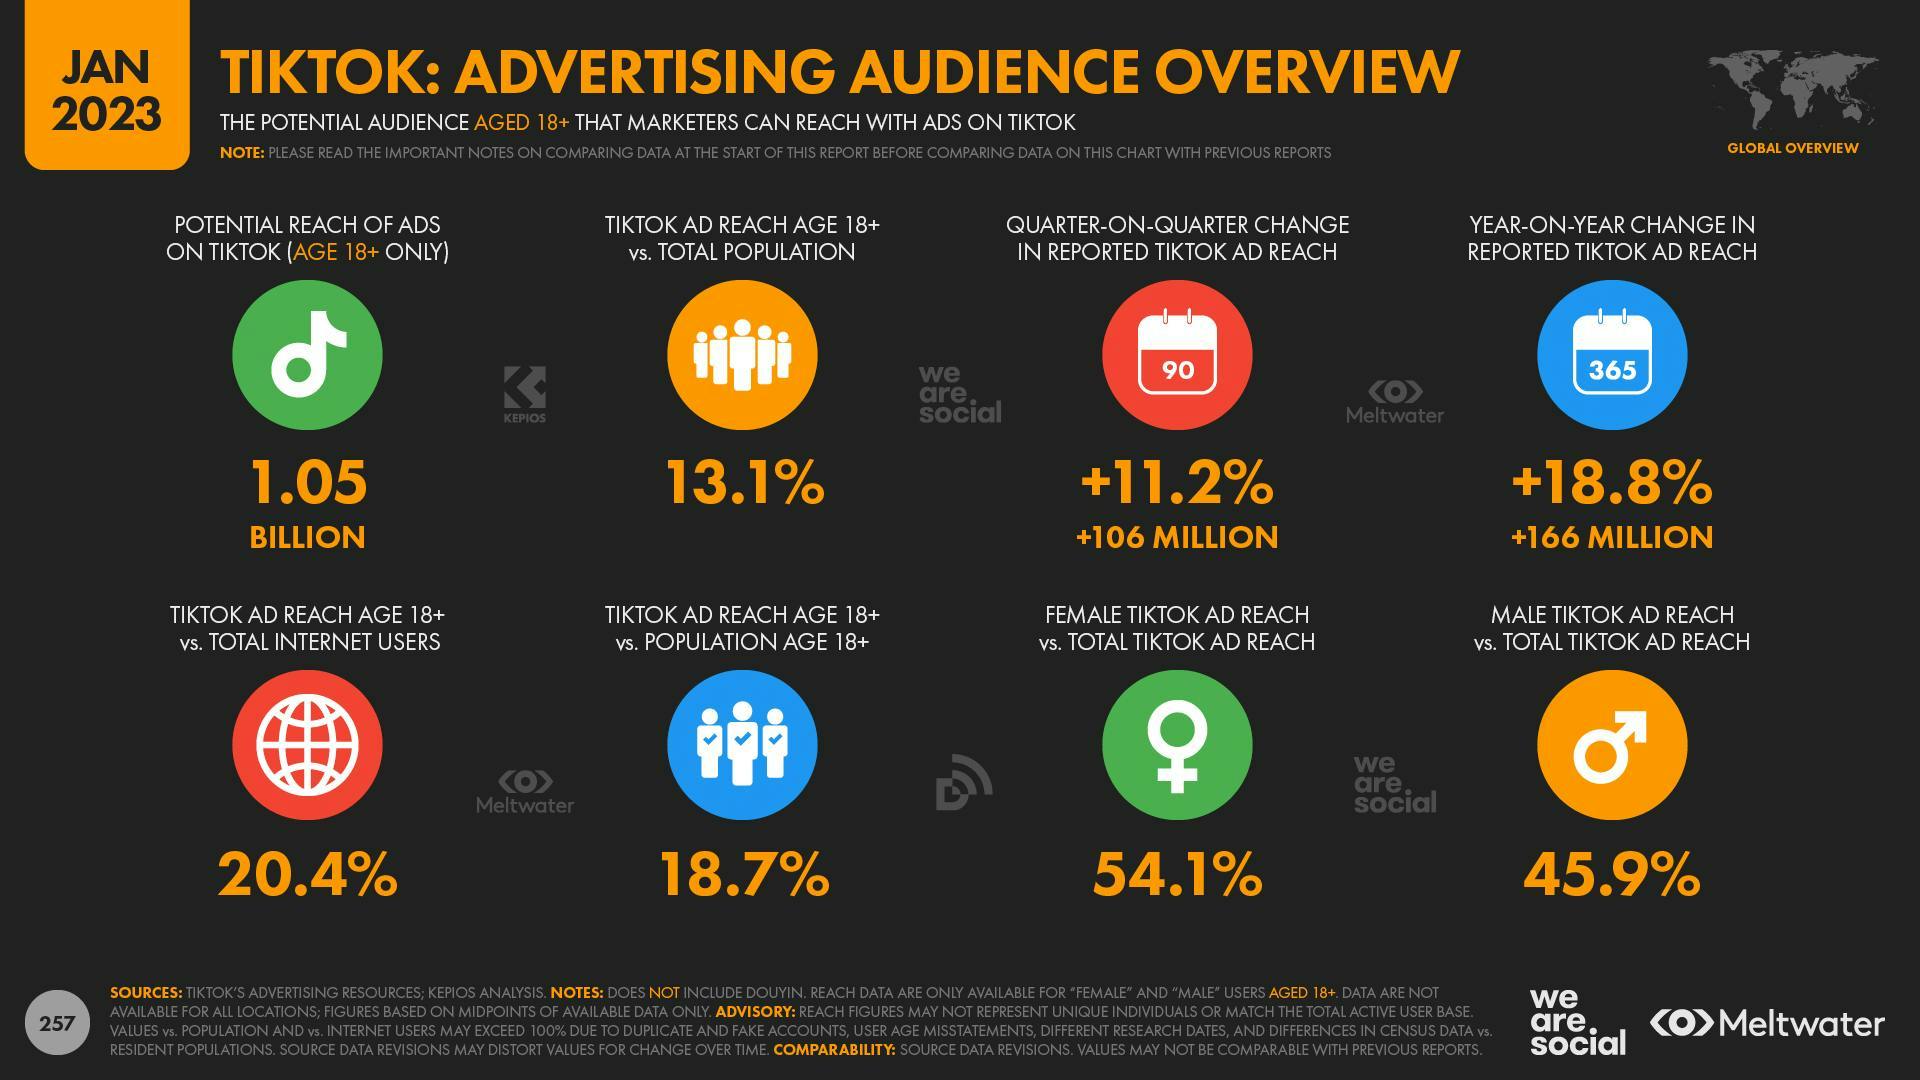 TikTok: Advertising audience overview 2023